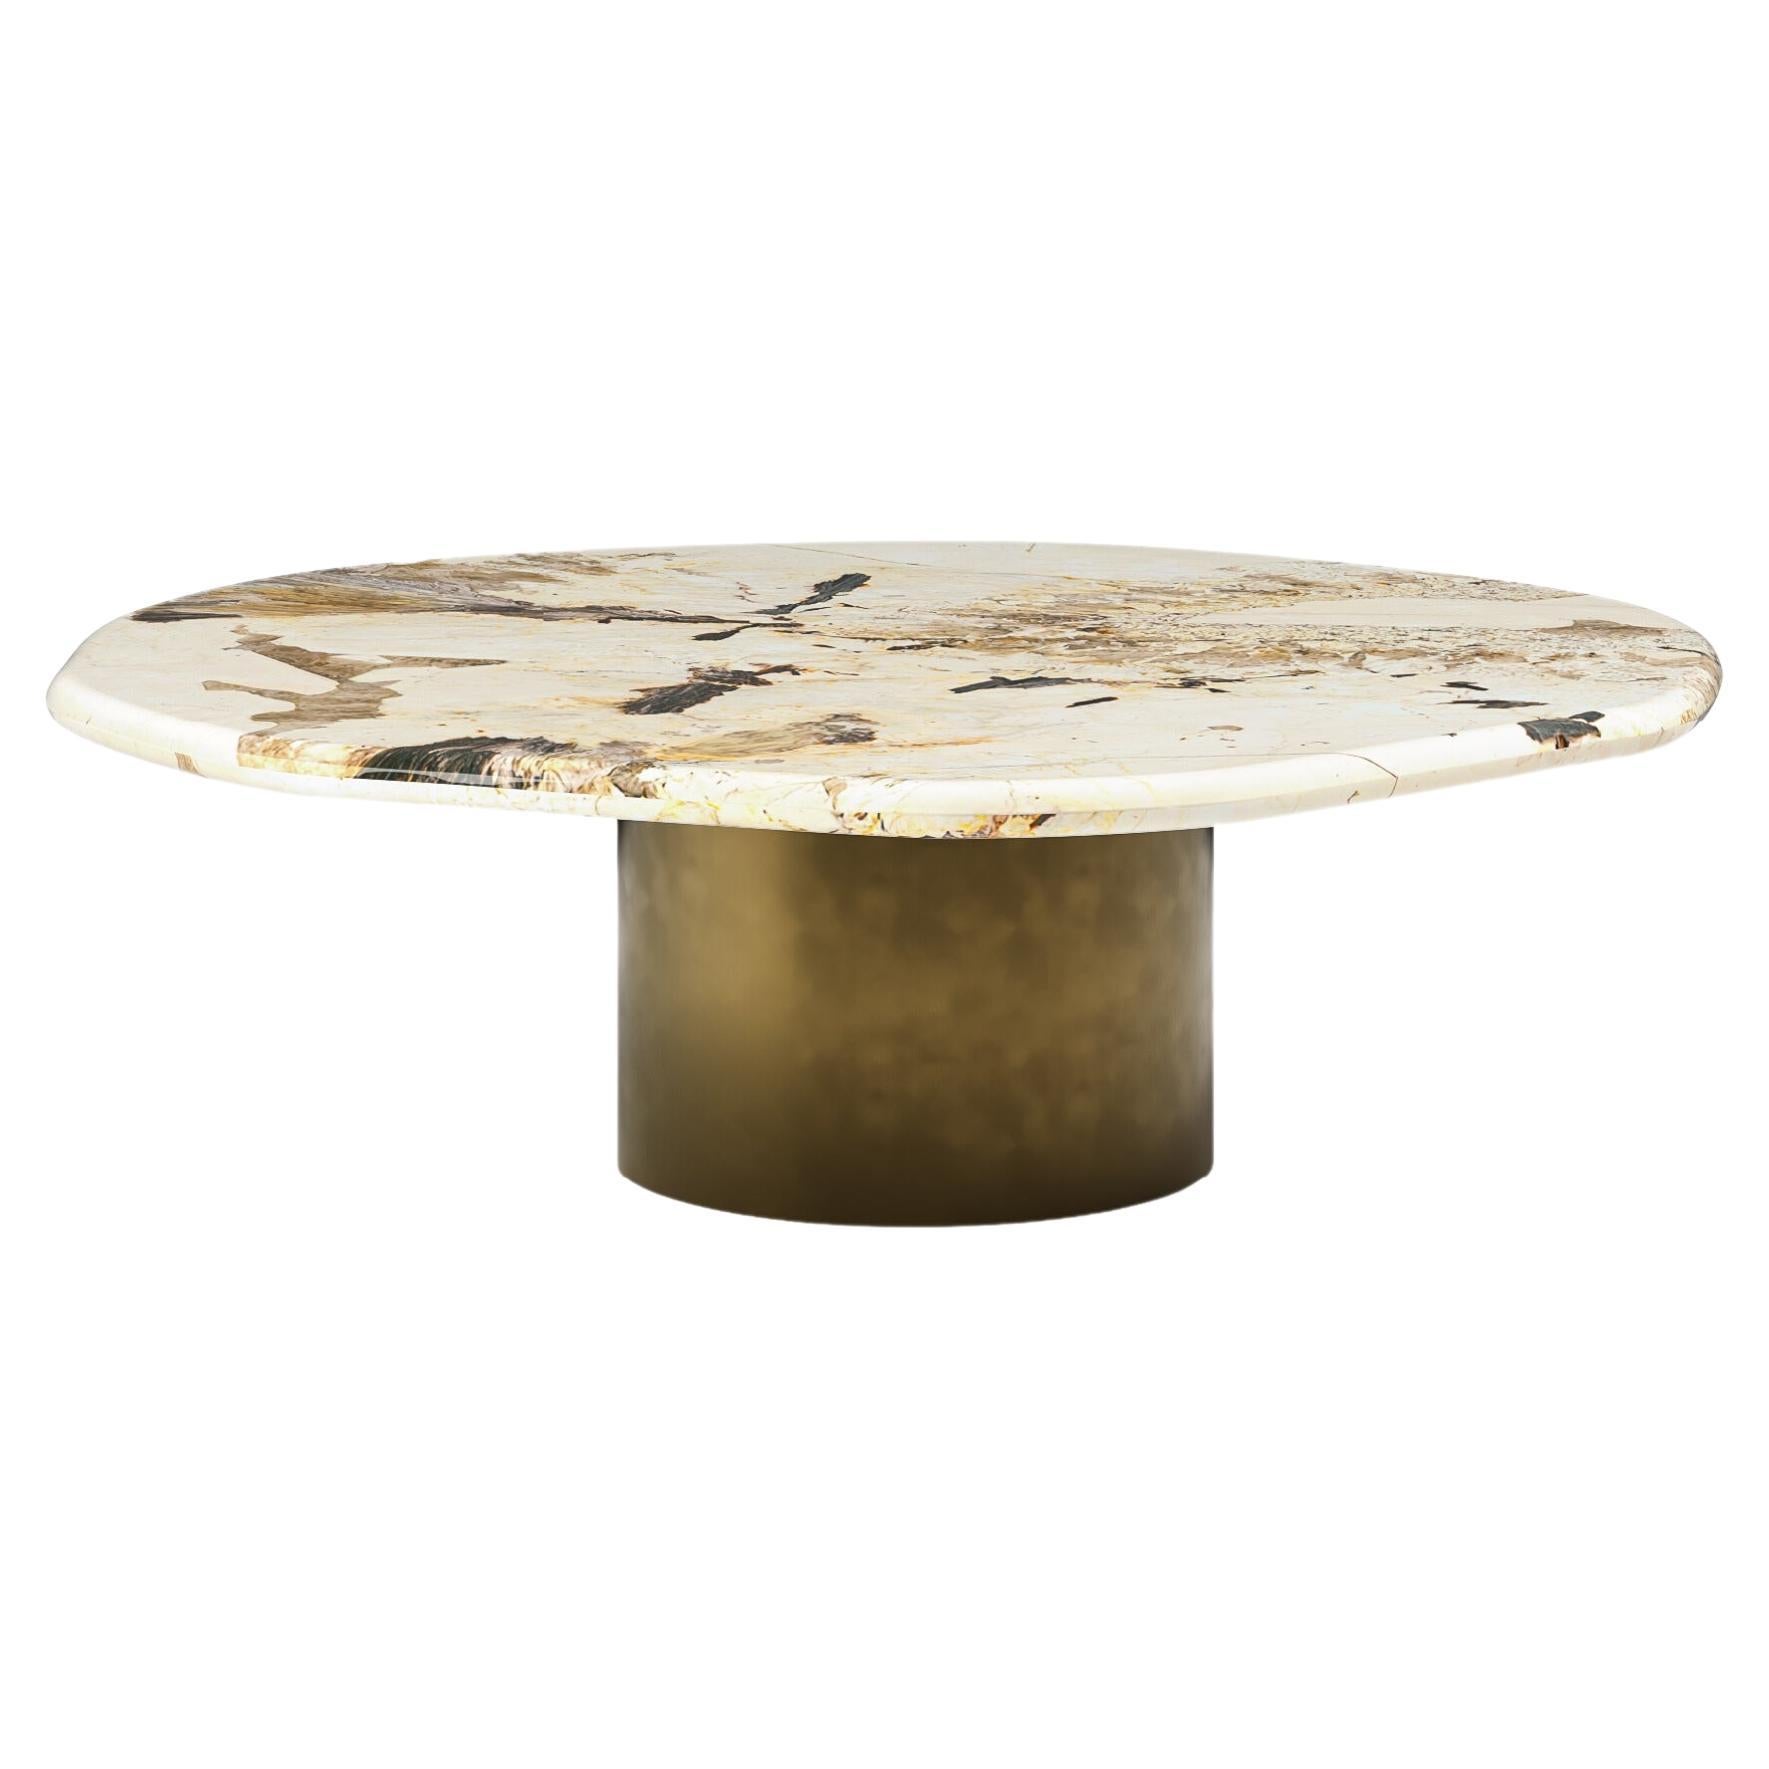 FORM(LA) Lago Round Coffee Table 42”L x 42”W x 14”H Quartzite & Antique Bronze For Sale